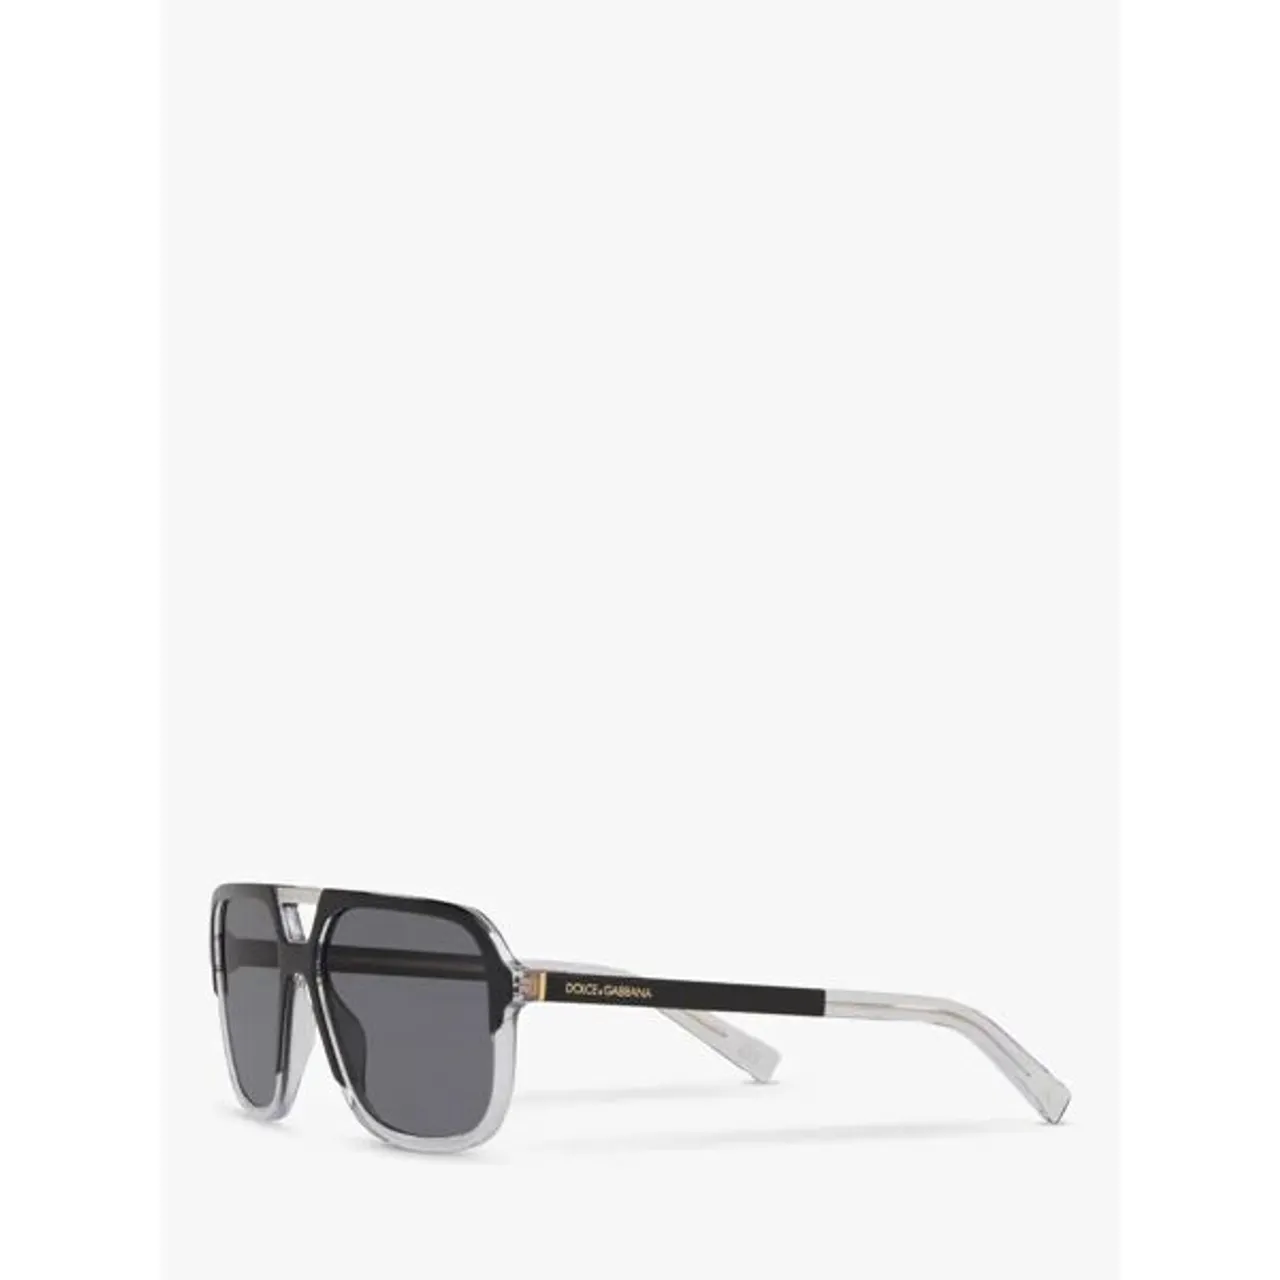 Dolce & Gabbana DG4354 Men's Polarised Square Sunglasses, Black Clear/Grey - Black Clear/Grey - Male